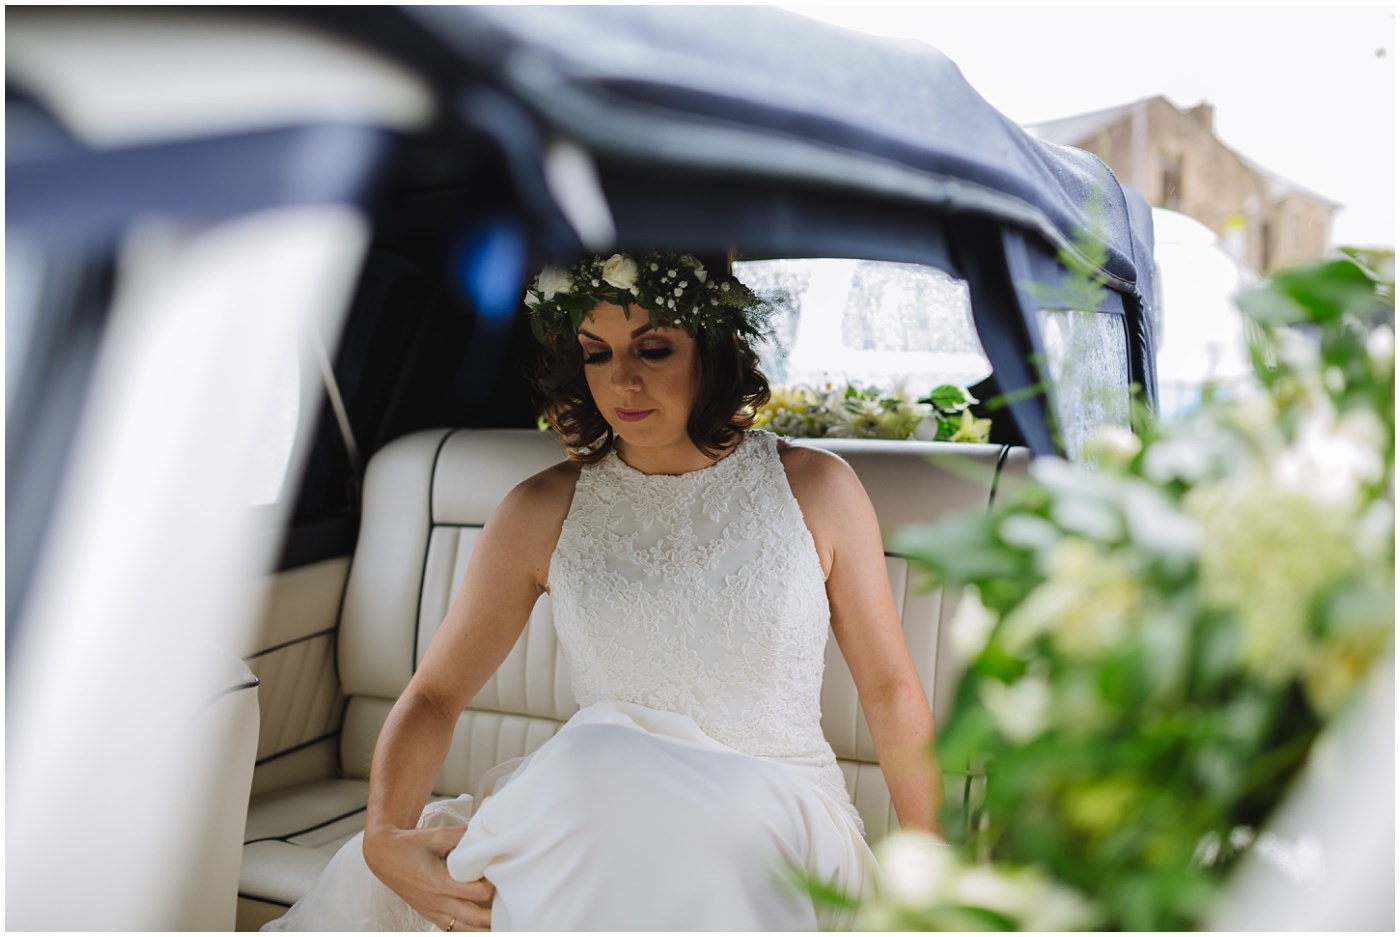 bride arrives at church in wedding car